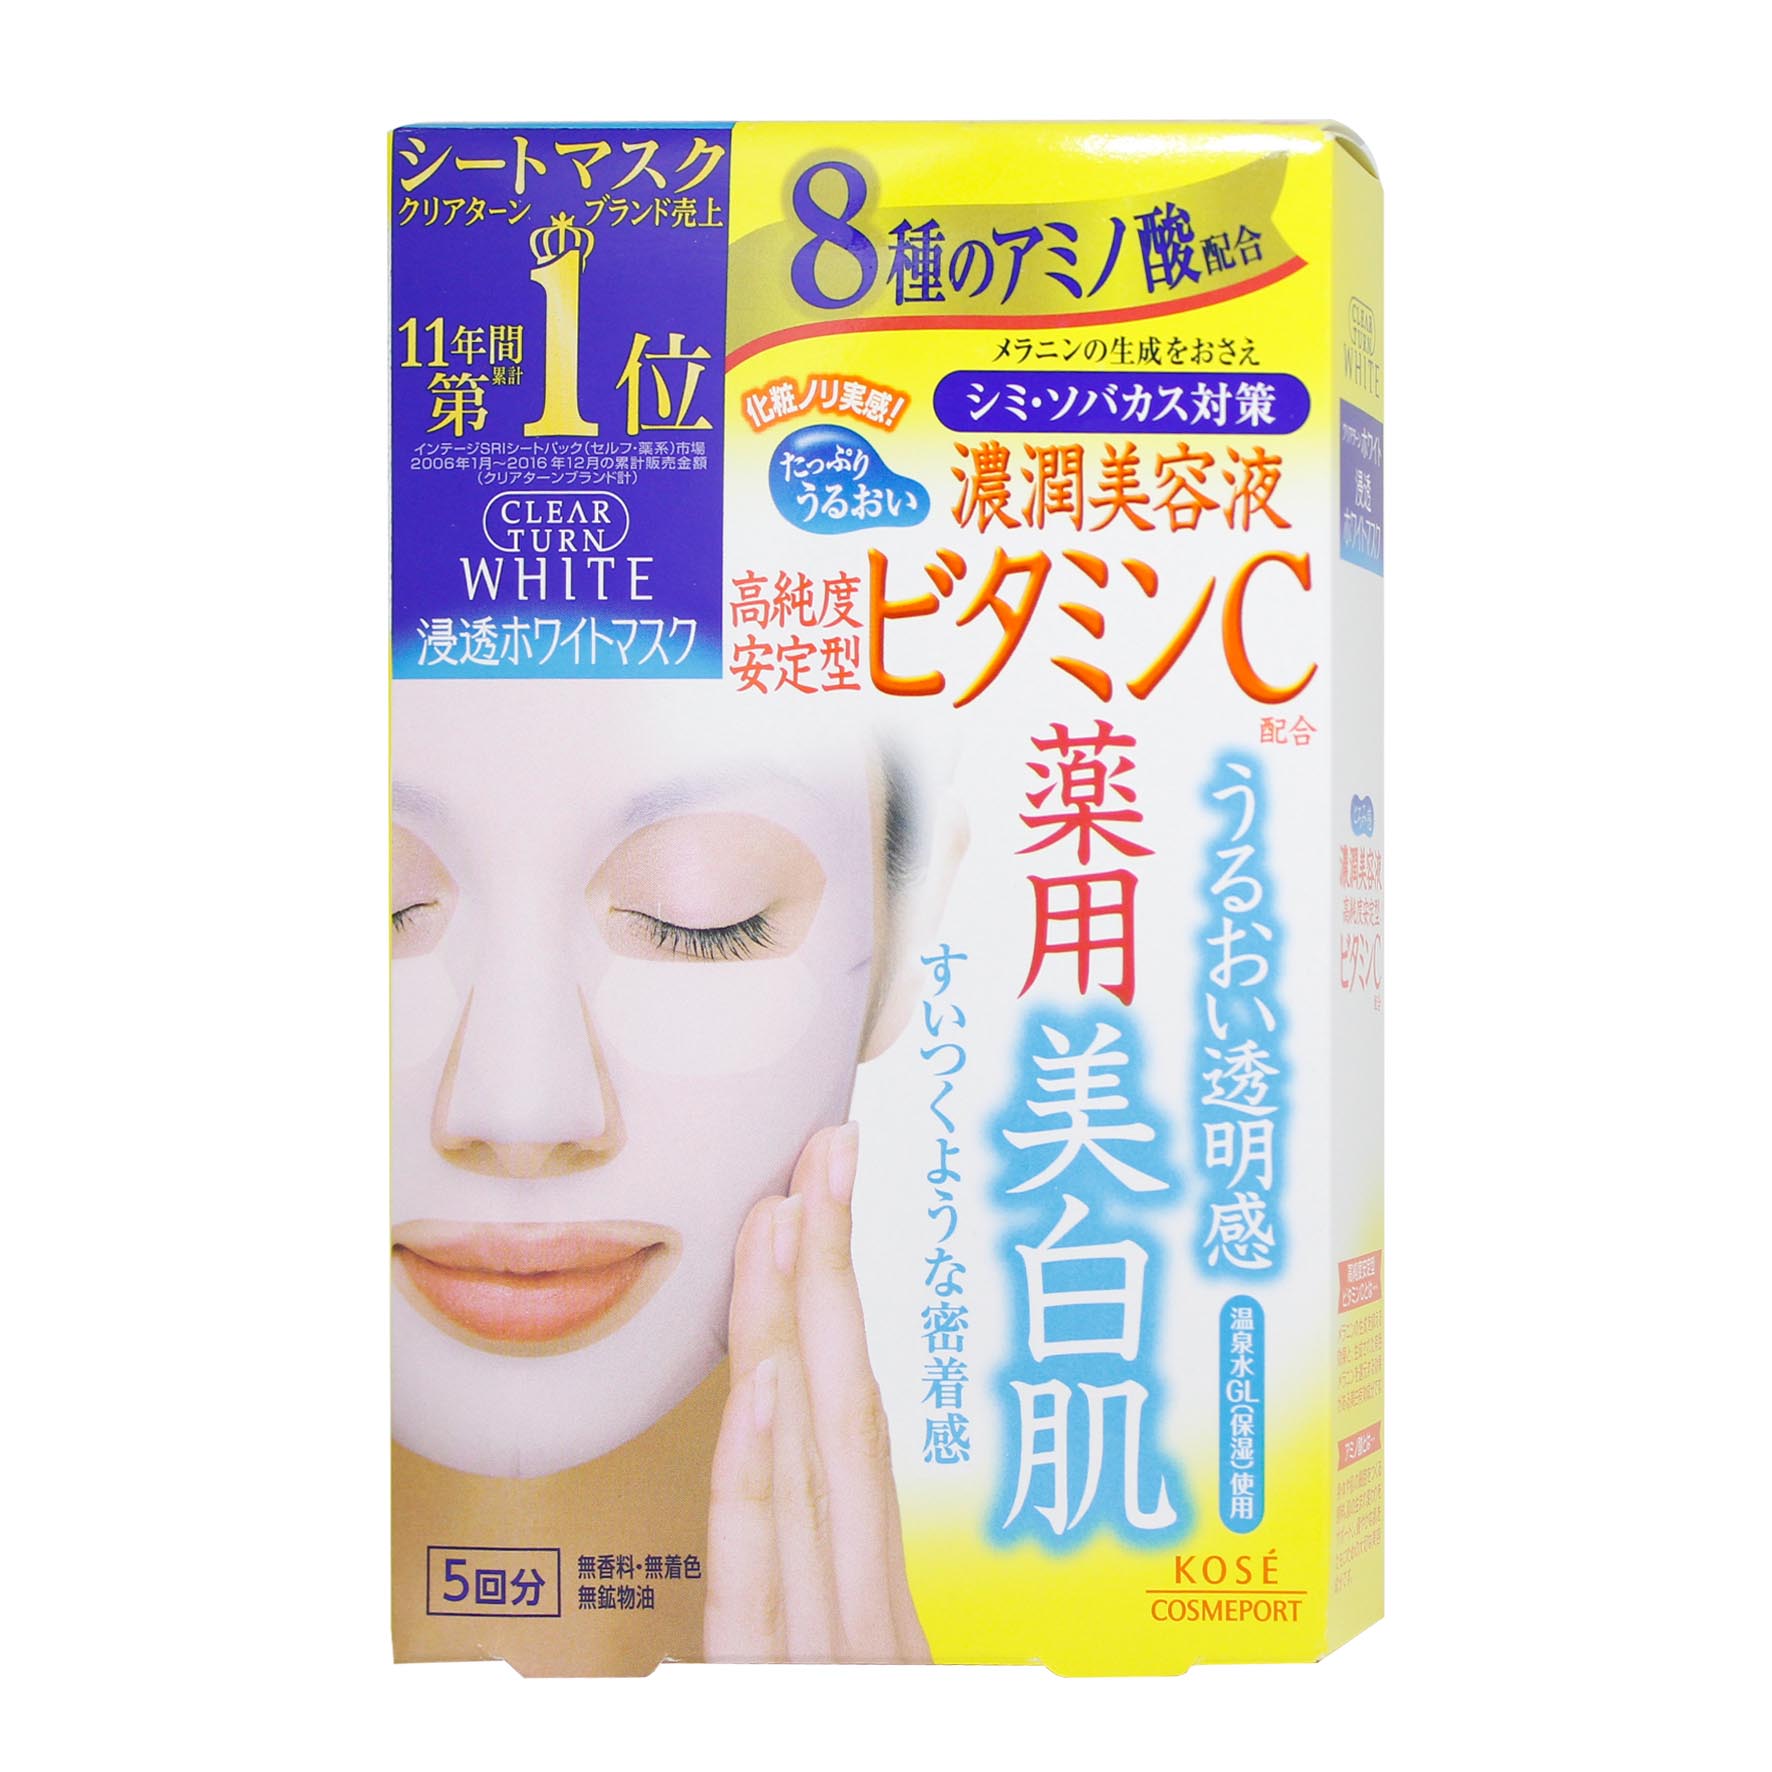 Kose Cosmeport Kose Clear Turn White Mask Vitamin C